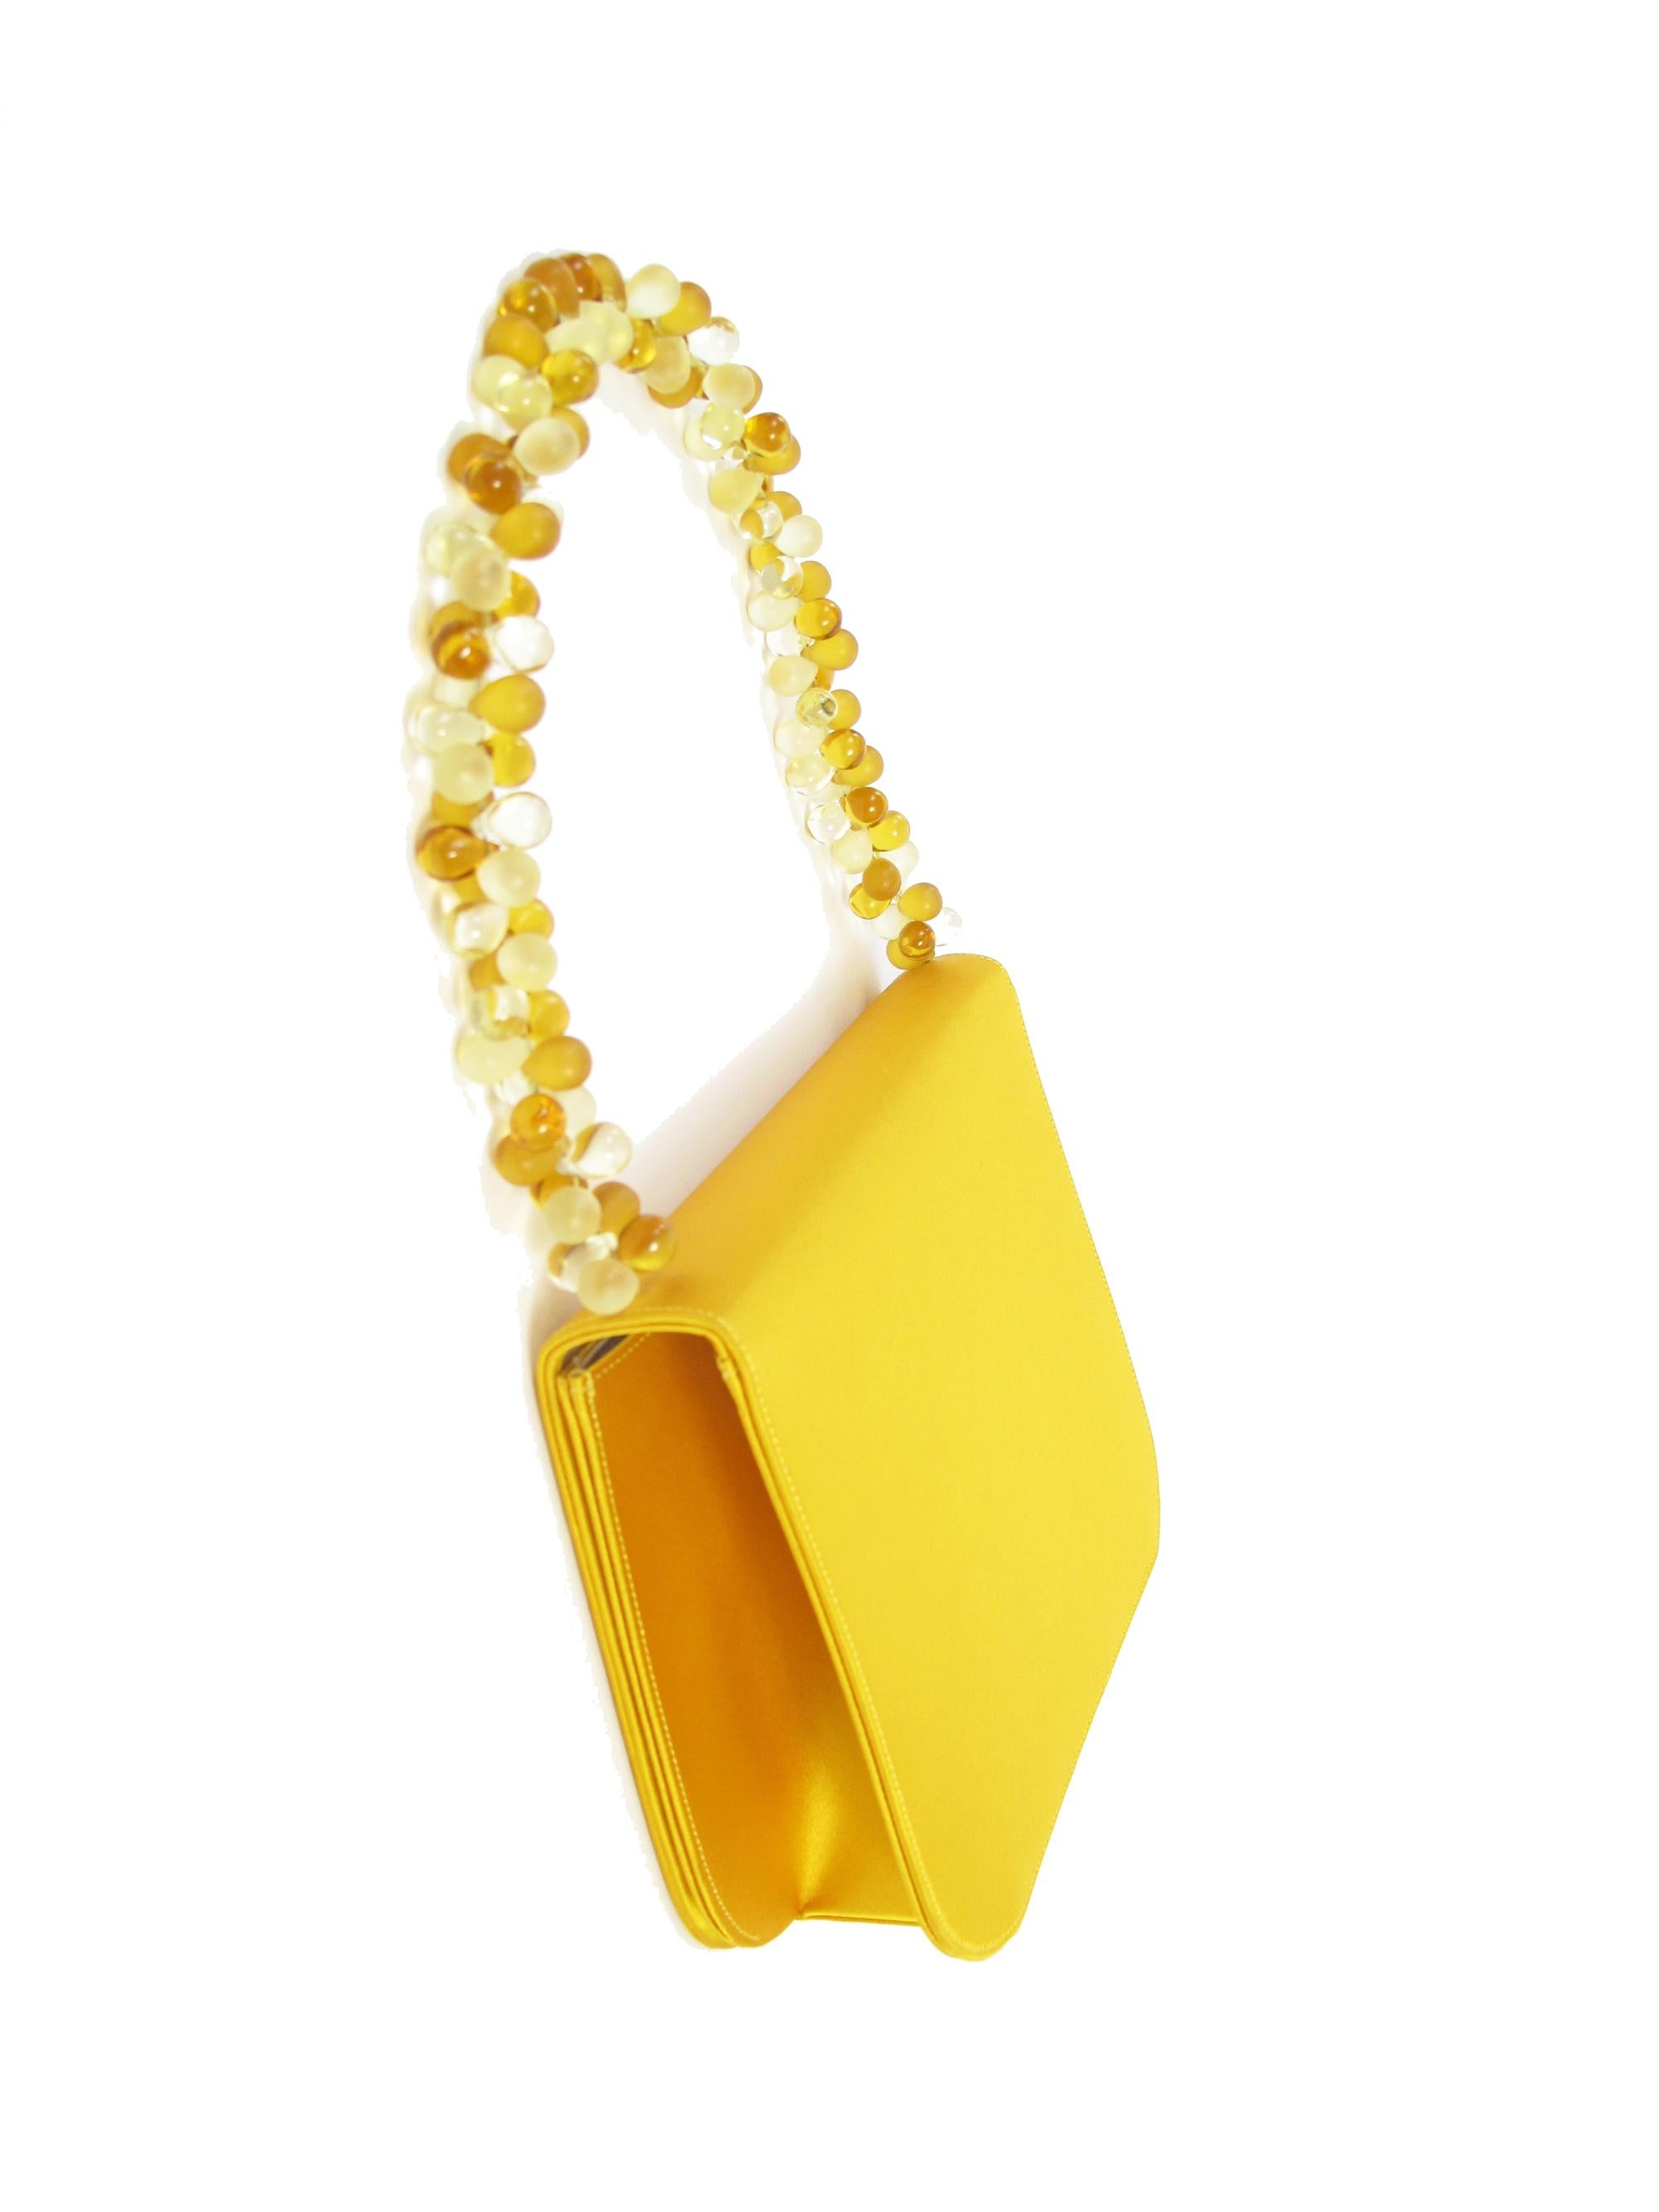 Renaud Pellegrino yellow satin flap bag with beaded handle. Condition: Very good. 
8